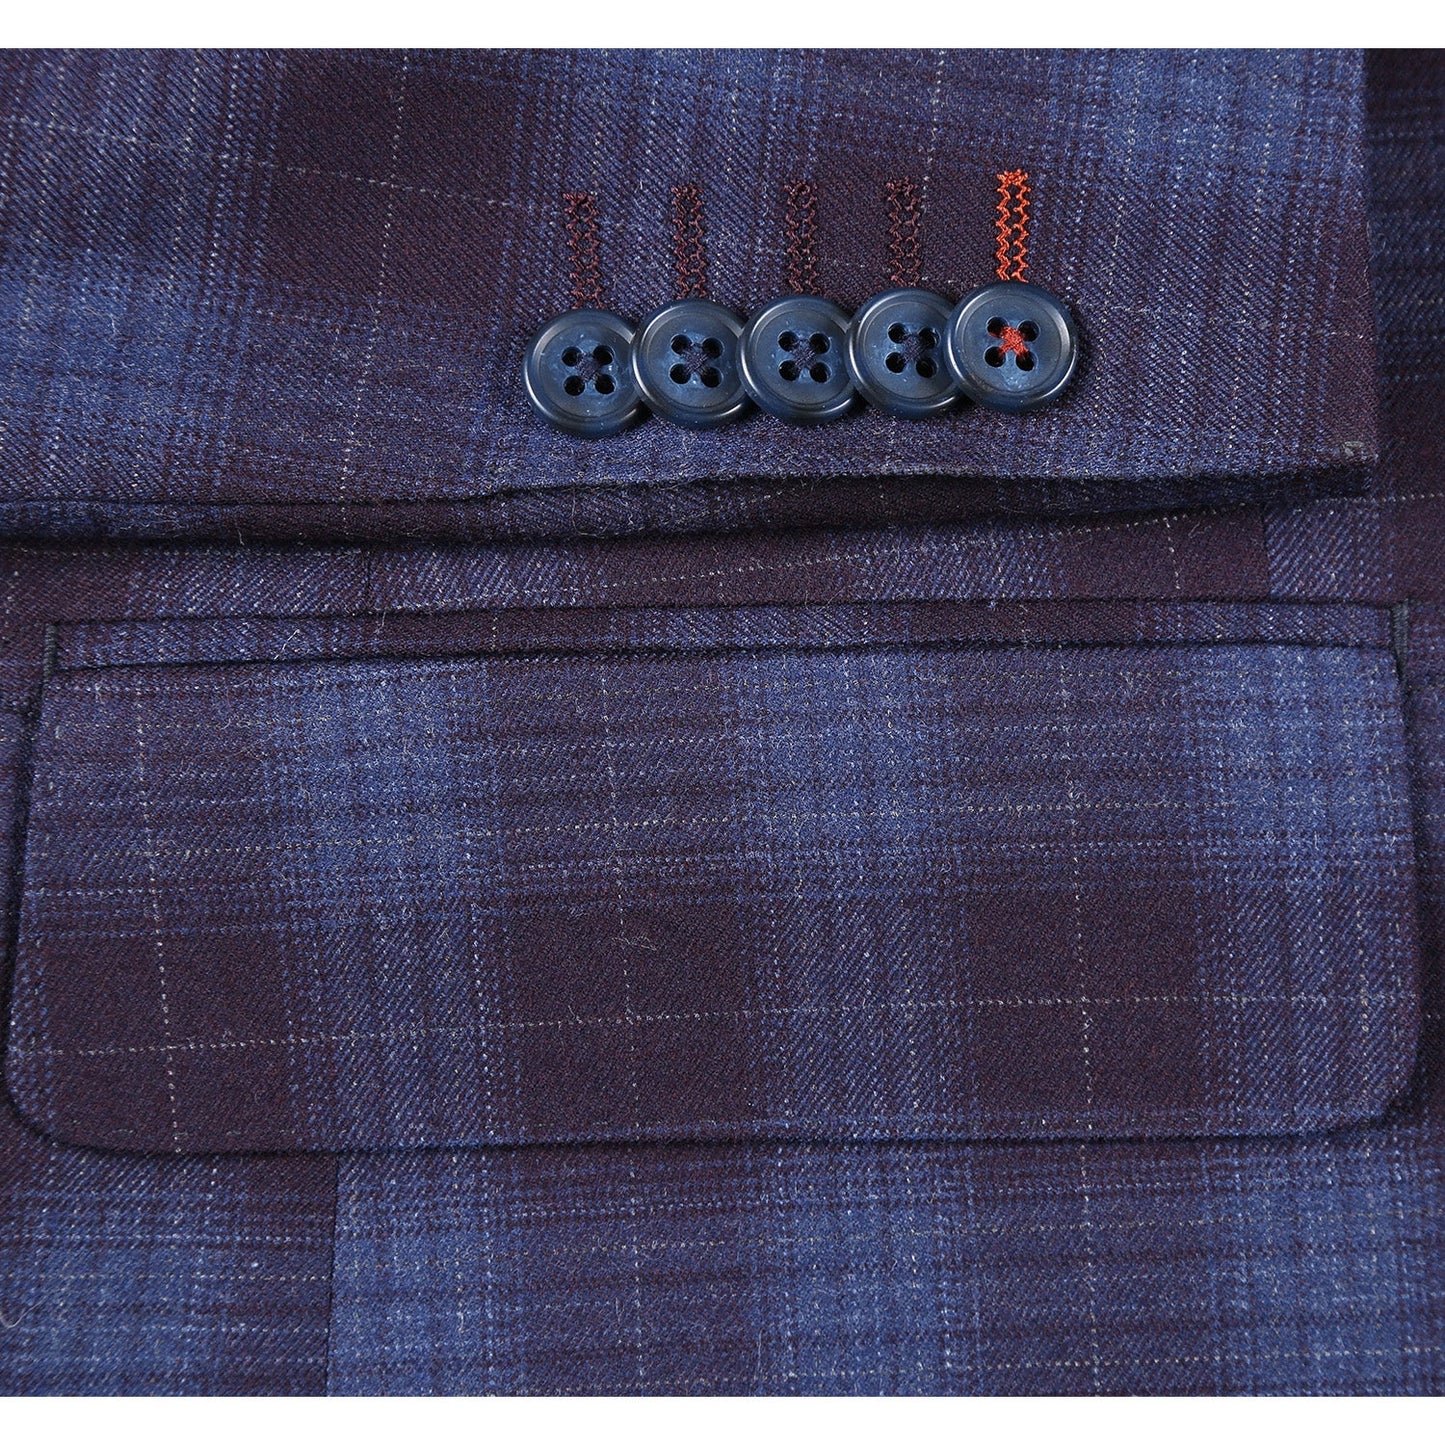 EL62-67-750 English Laundry Slim Fit Wine/Blue Plaid Wool Blend Suit